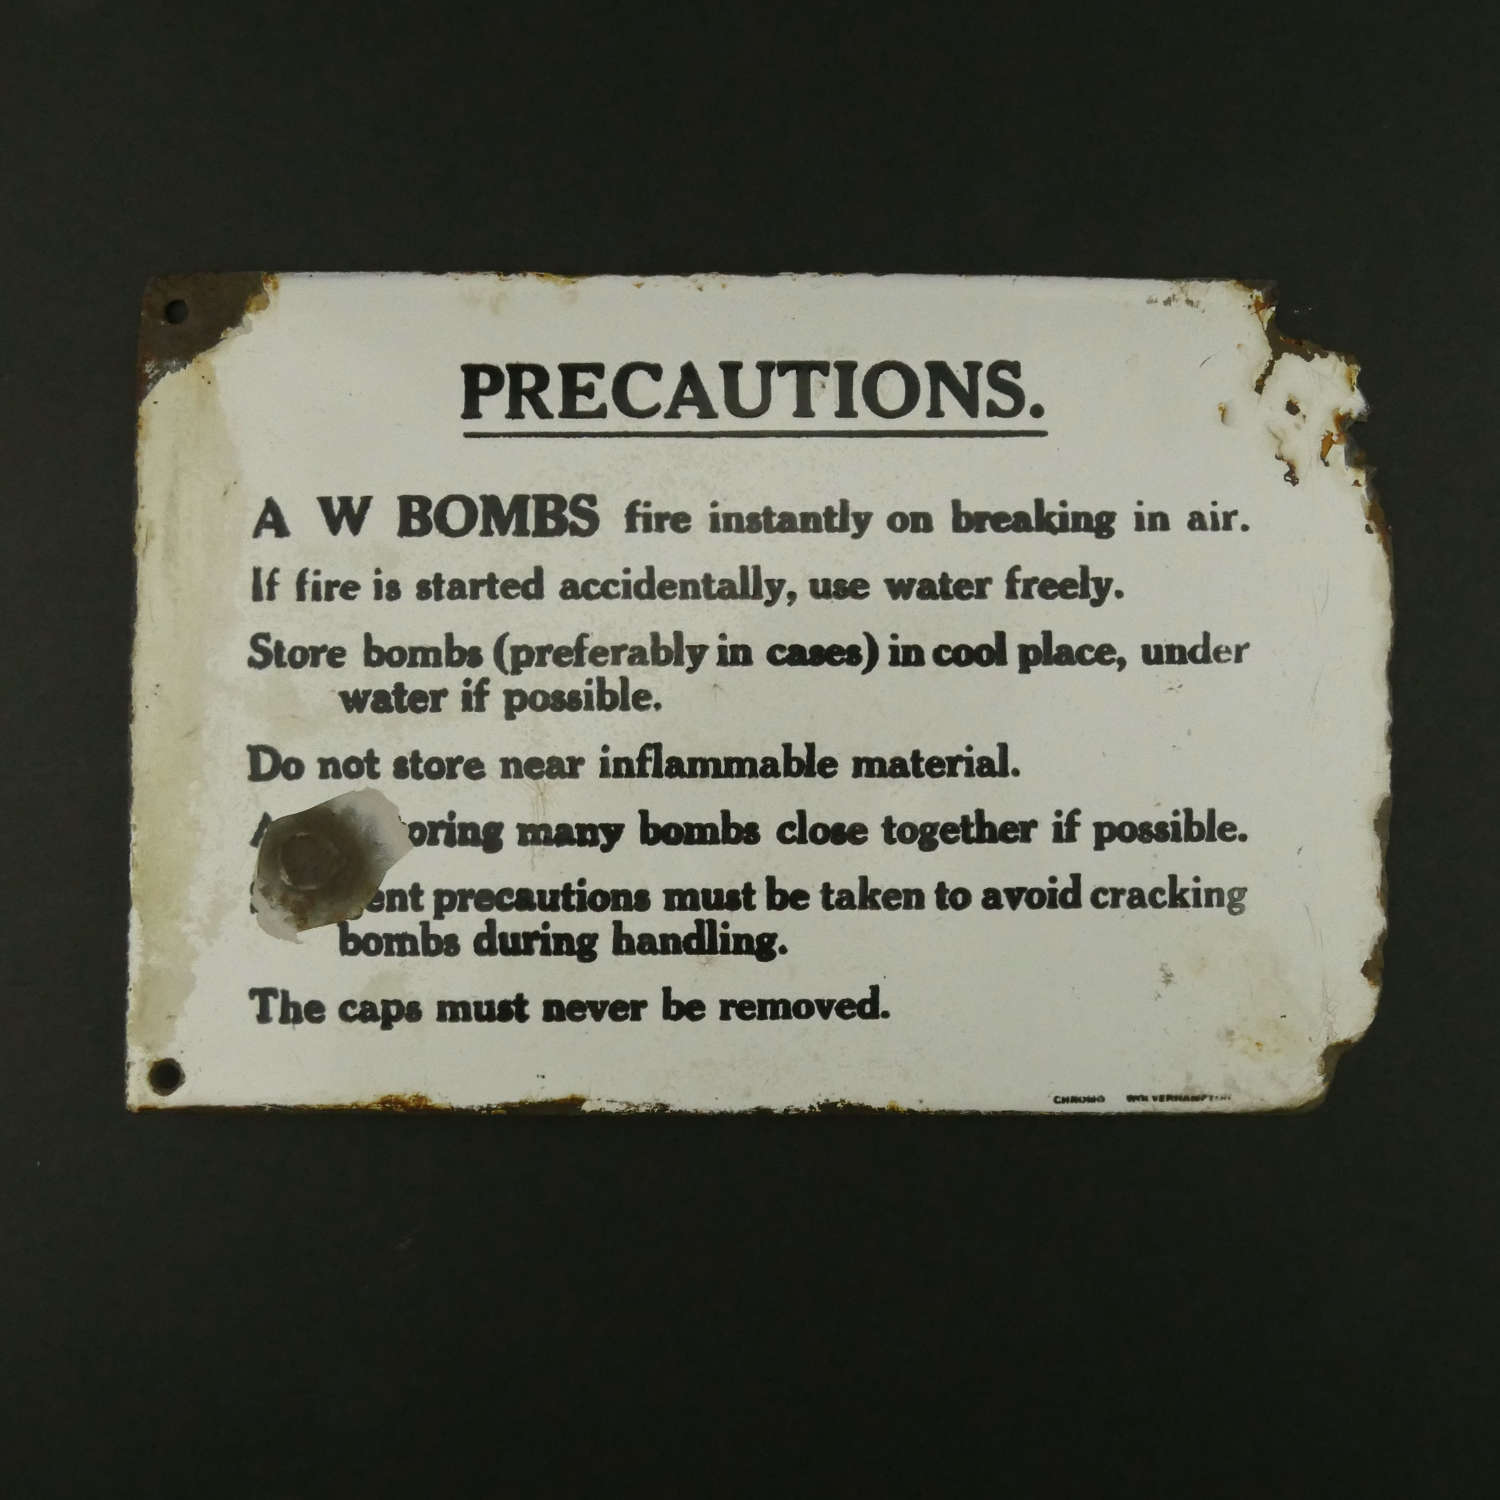 WW2 AW Bombs enamel sign